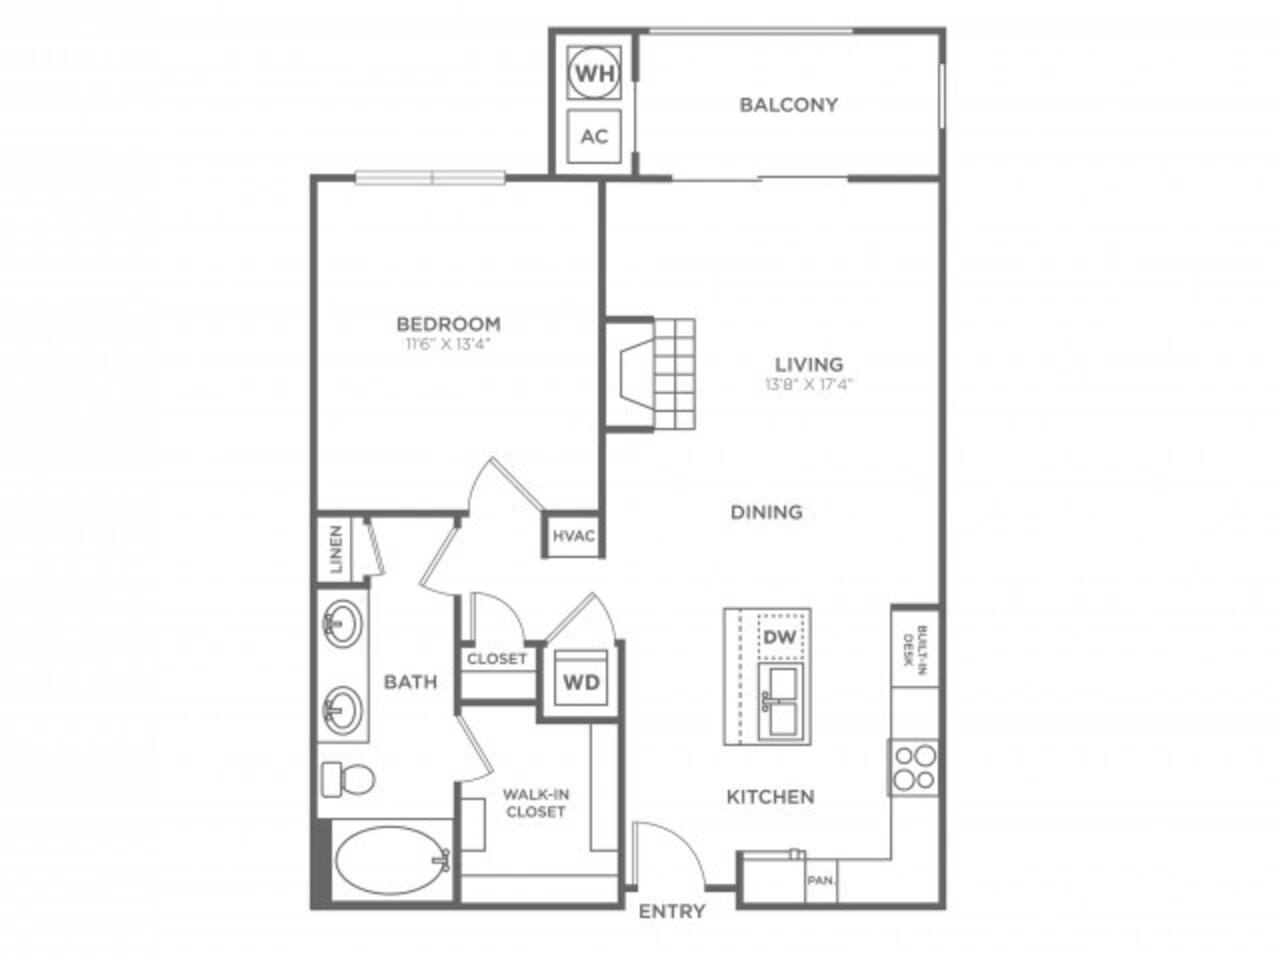 Floorplan diagram for 1 Bedroom 1 Bath (785 SF), showing 1 bedroom